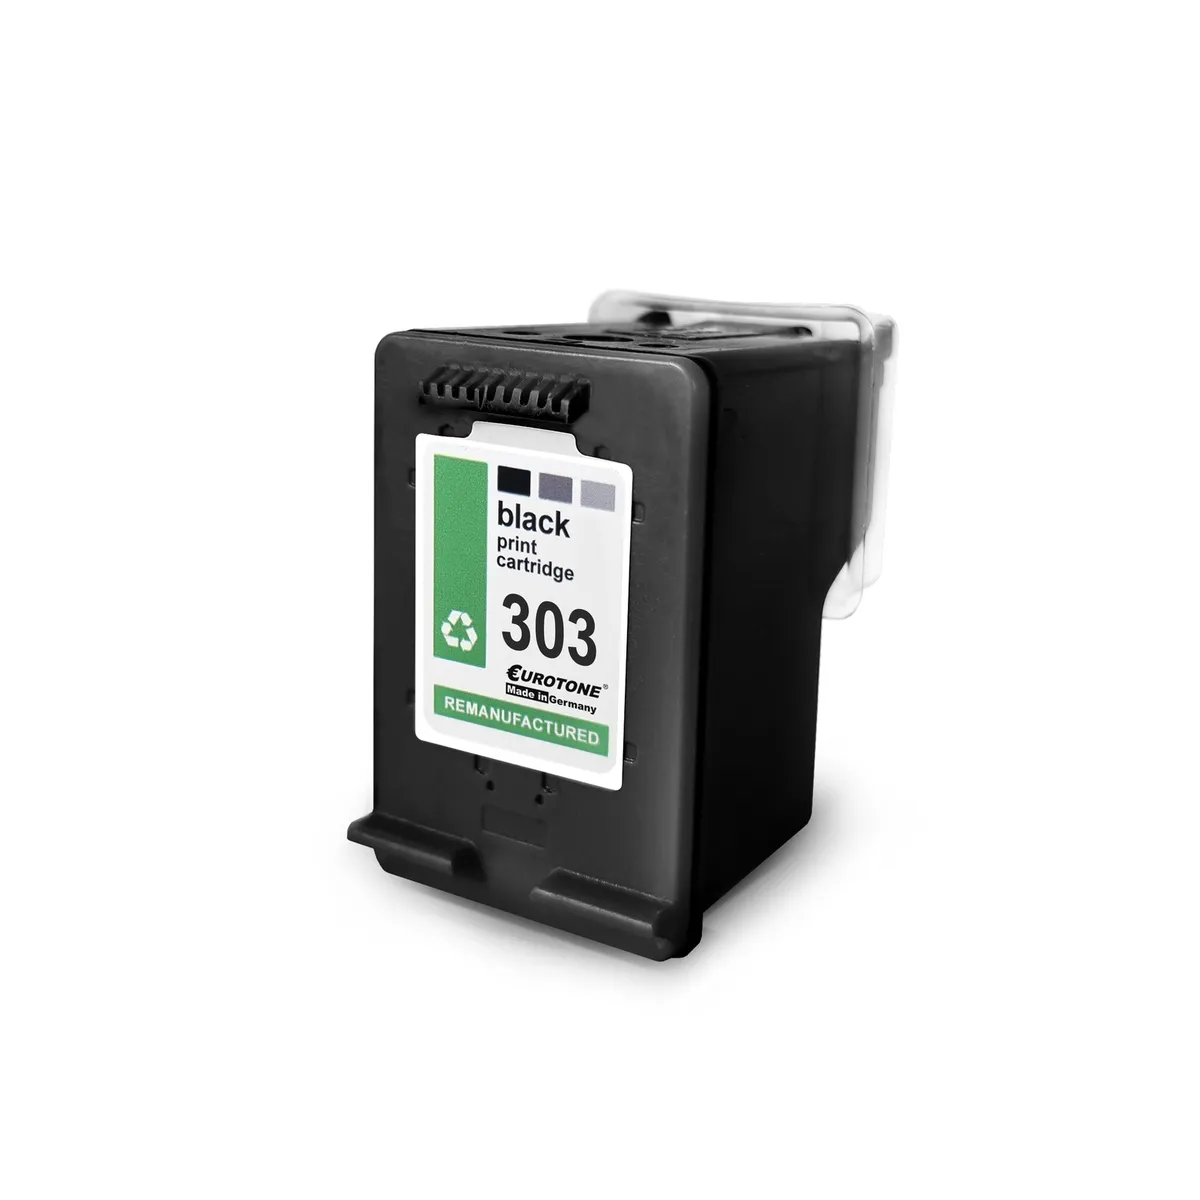 Refilled High Capacity HP 303XL Black Ink Cartridge, Low Price Guarantee